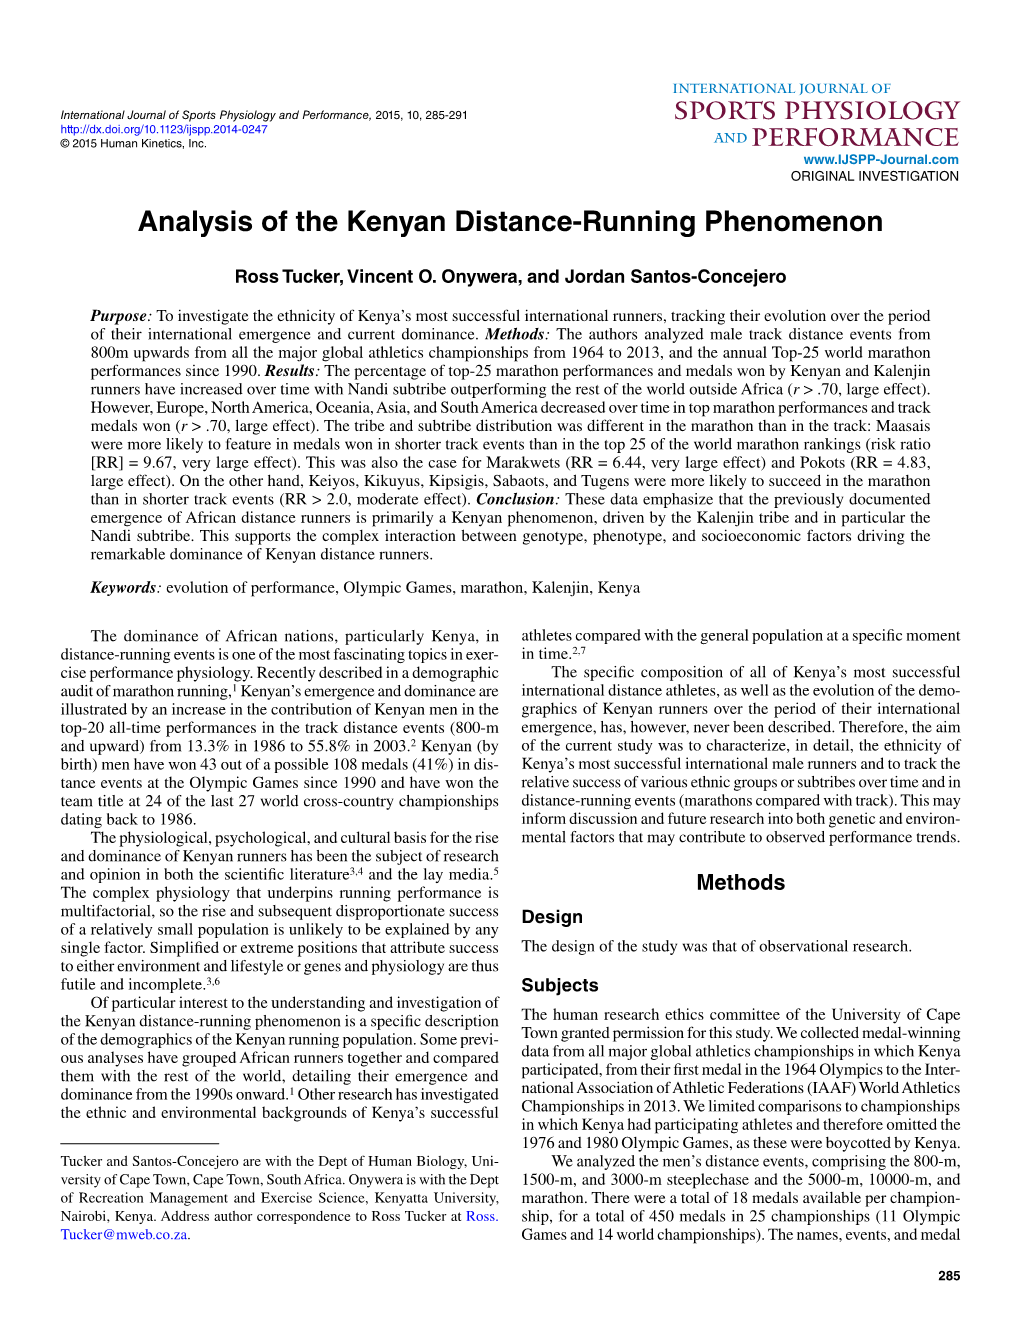 Analysis of the Kenyan Distance-Running Phenomenon